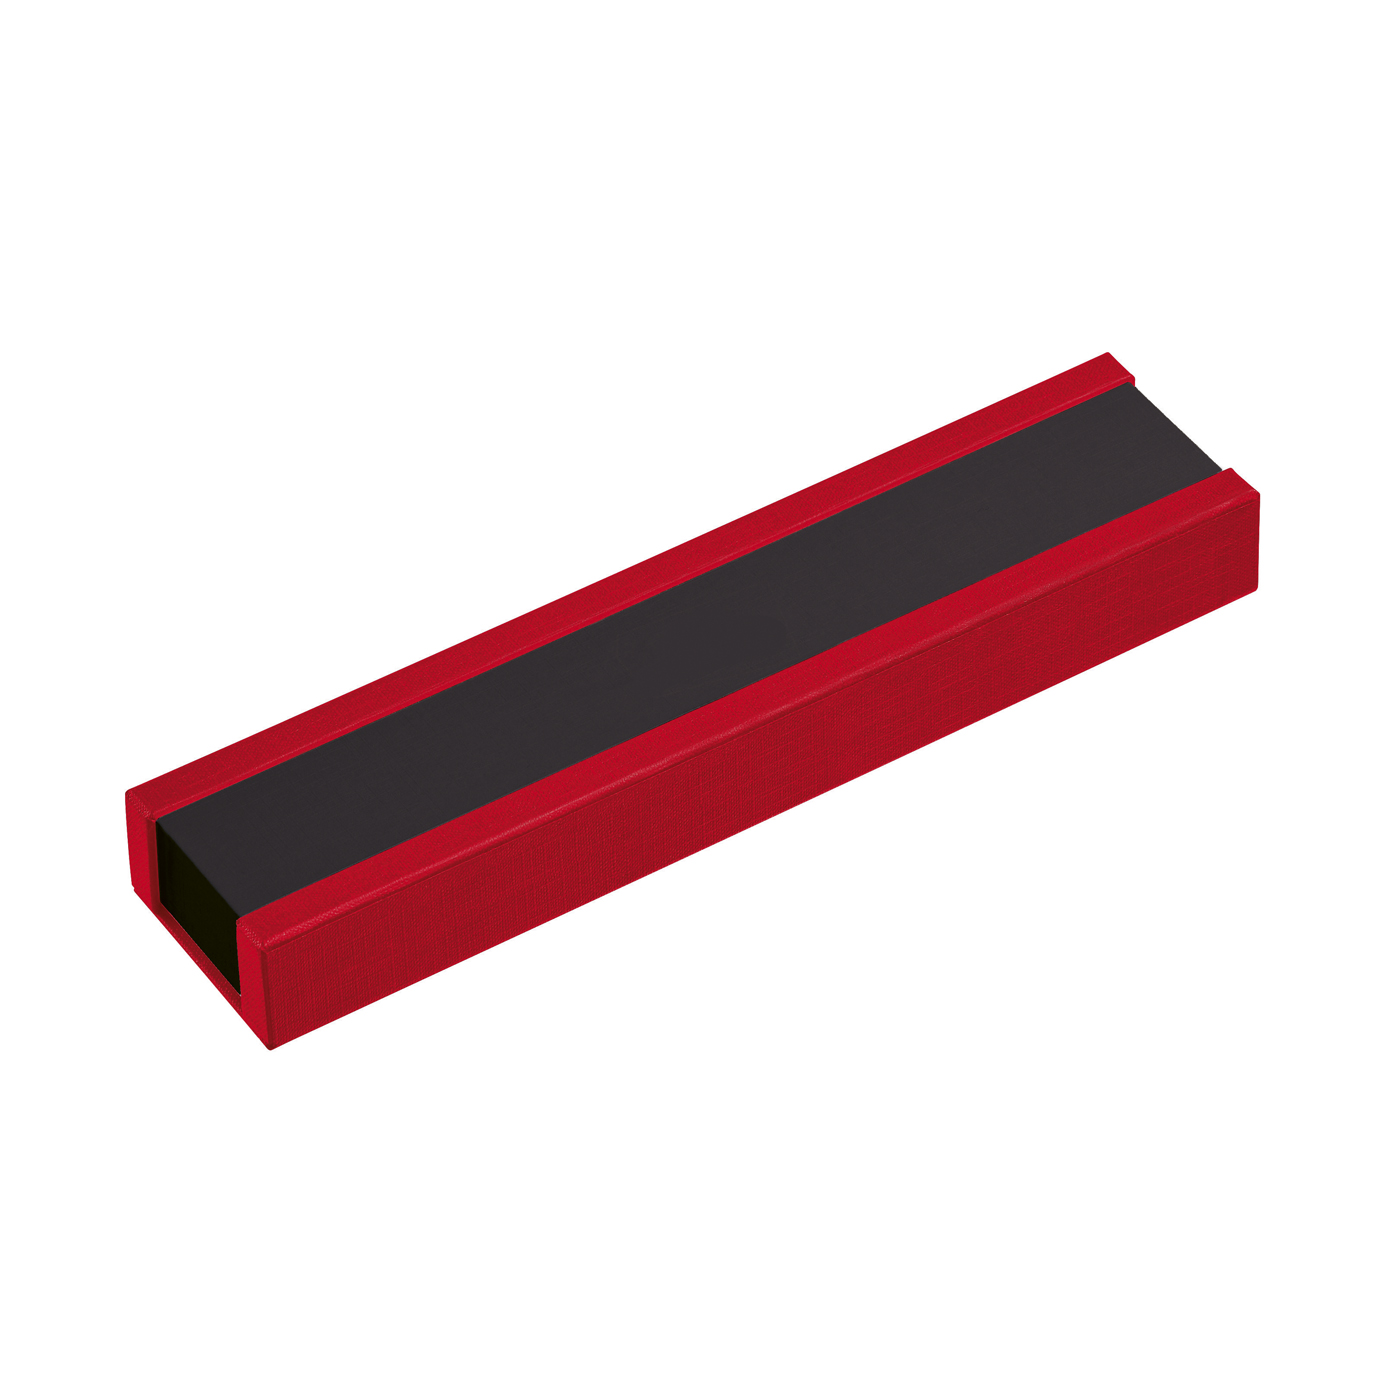 Jewellery Packaging "Claptonn", Red-Black, 250 x 50 x 23 mm - 1 piece